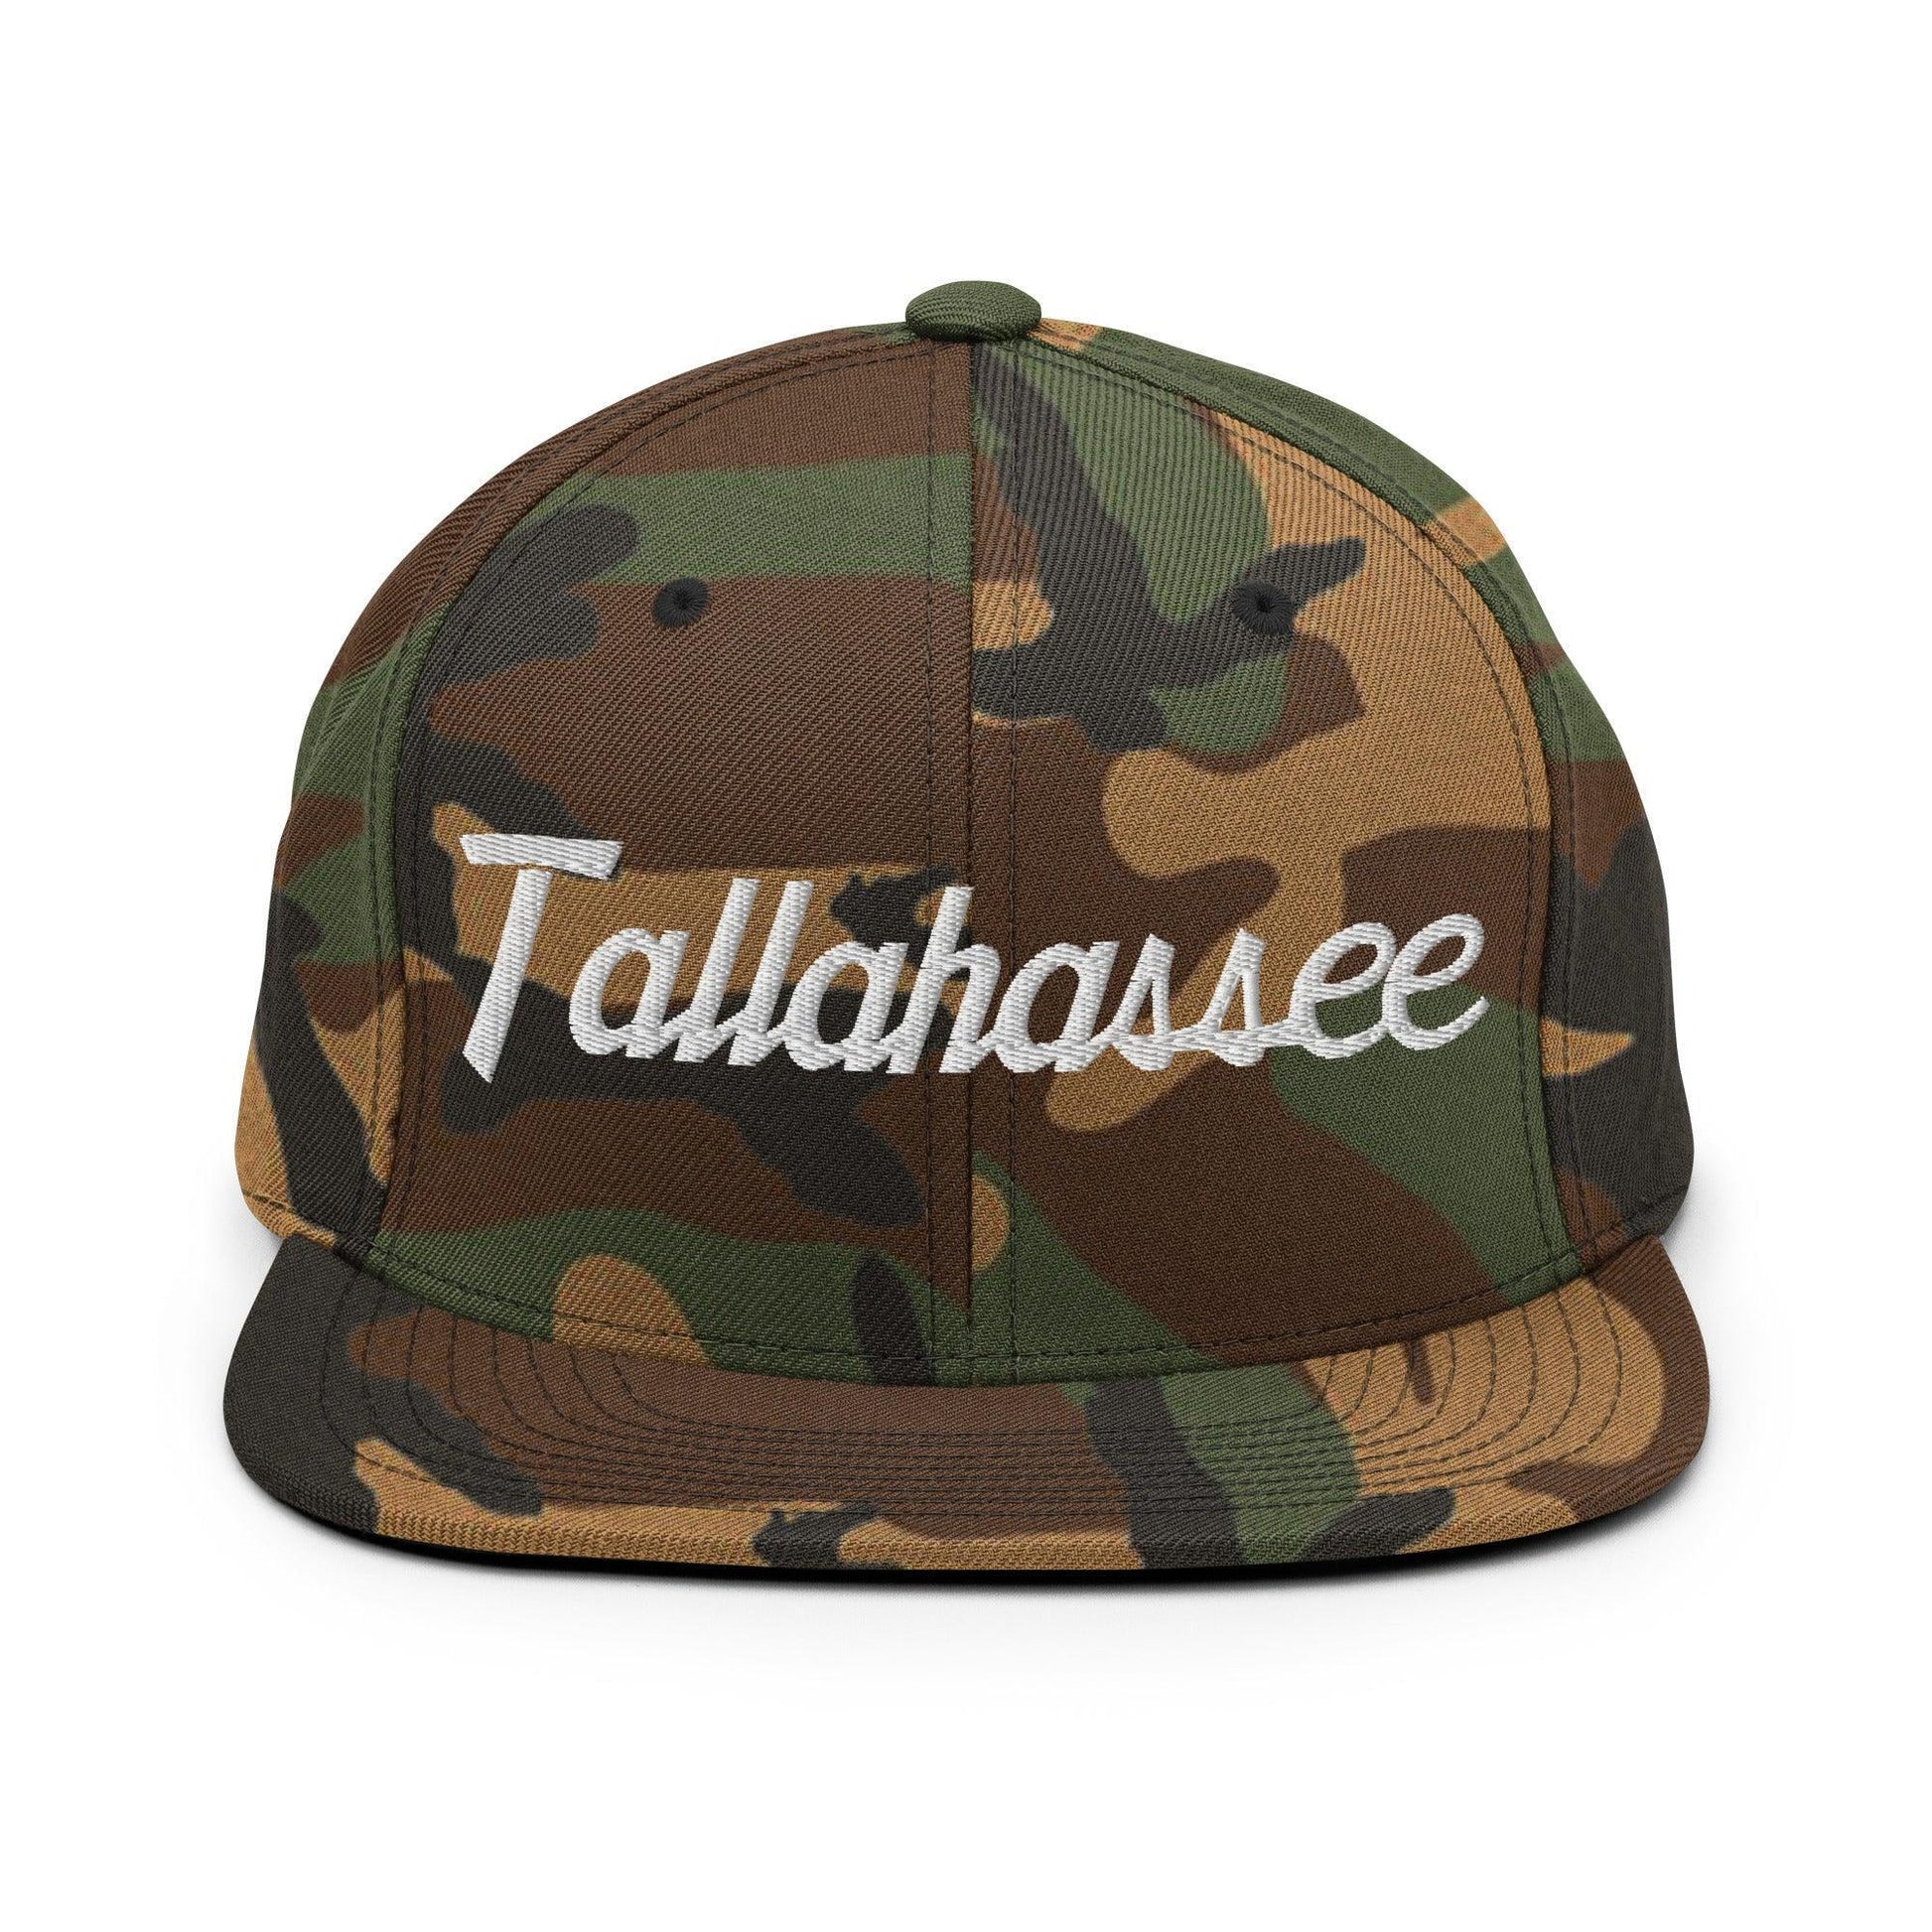 Tallahassee Script Snapback Hat Green Camo